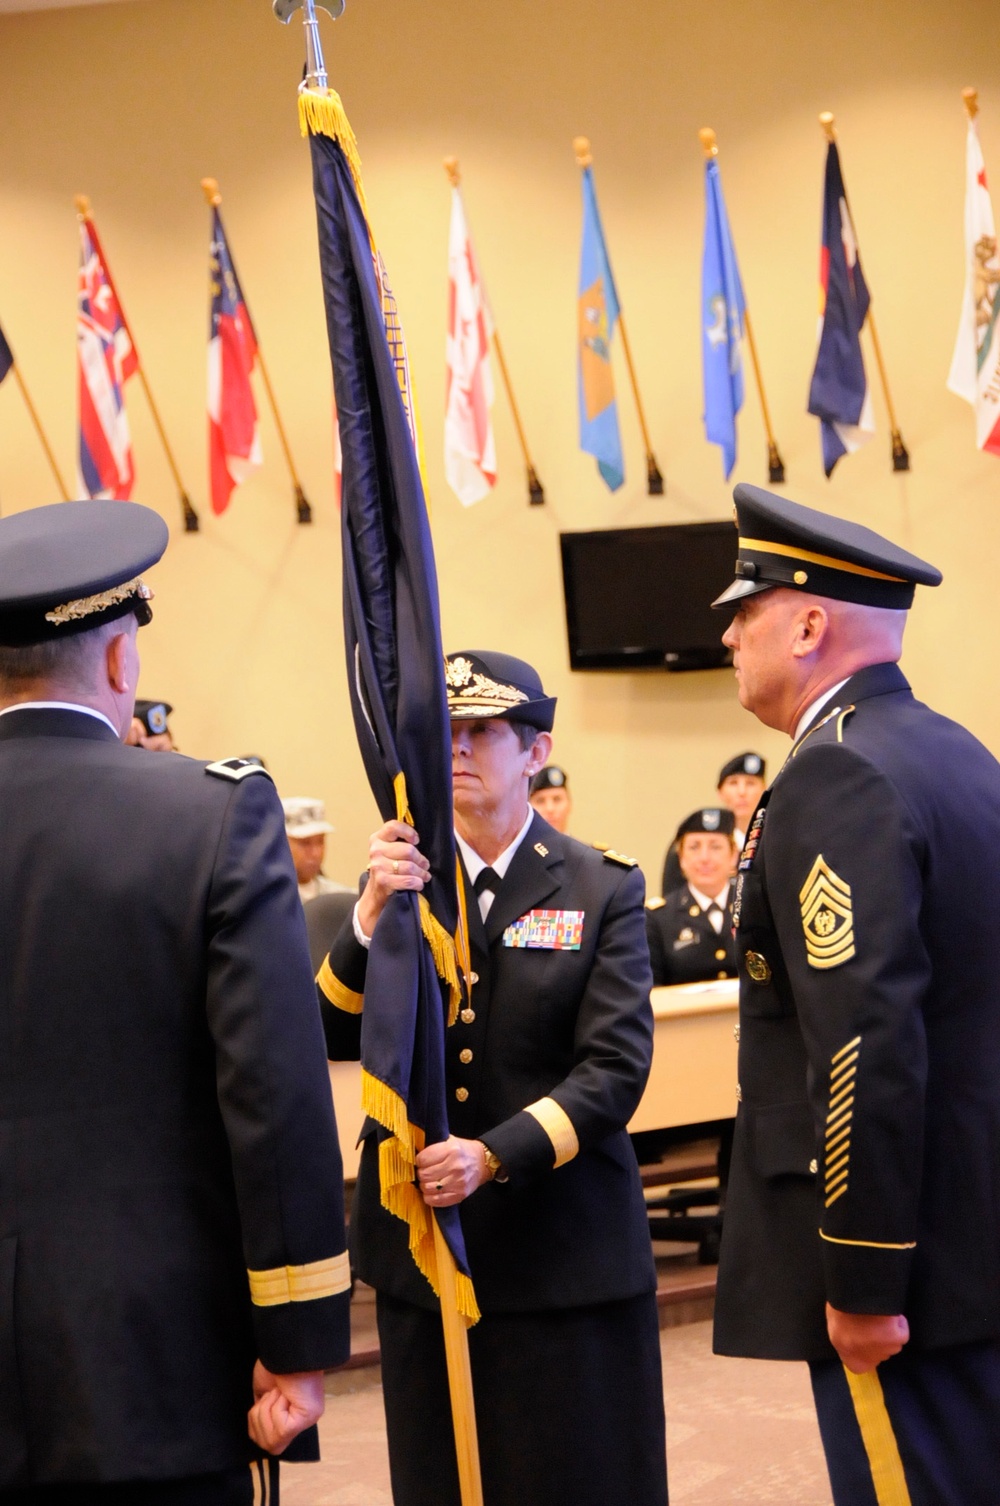 81st Regional Support Command welcomes new commanding generalCommanding General